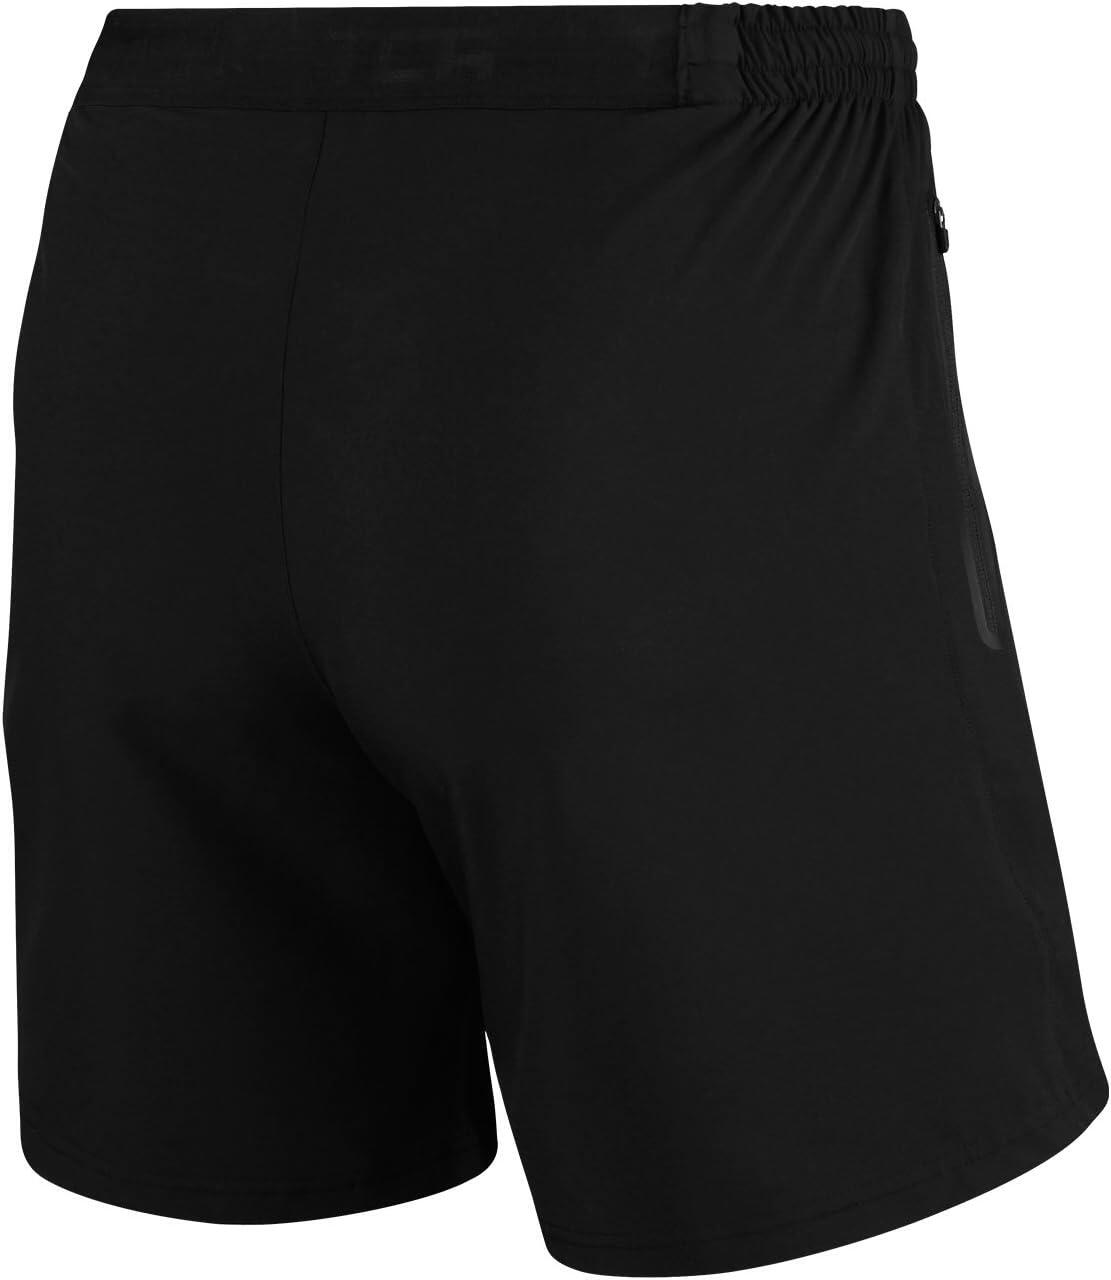 Men's Elite Tech Lightweight Running Shorts with Zip Pockets - Black/Black 2/6